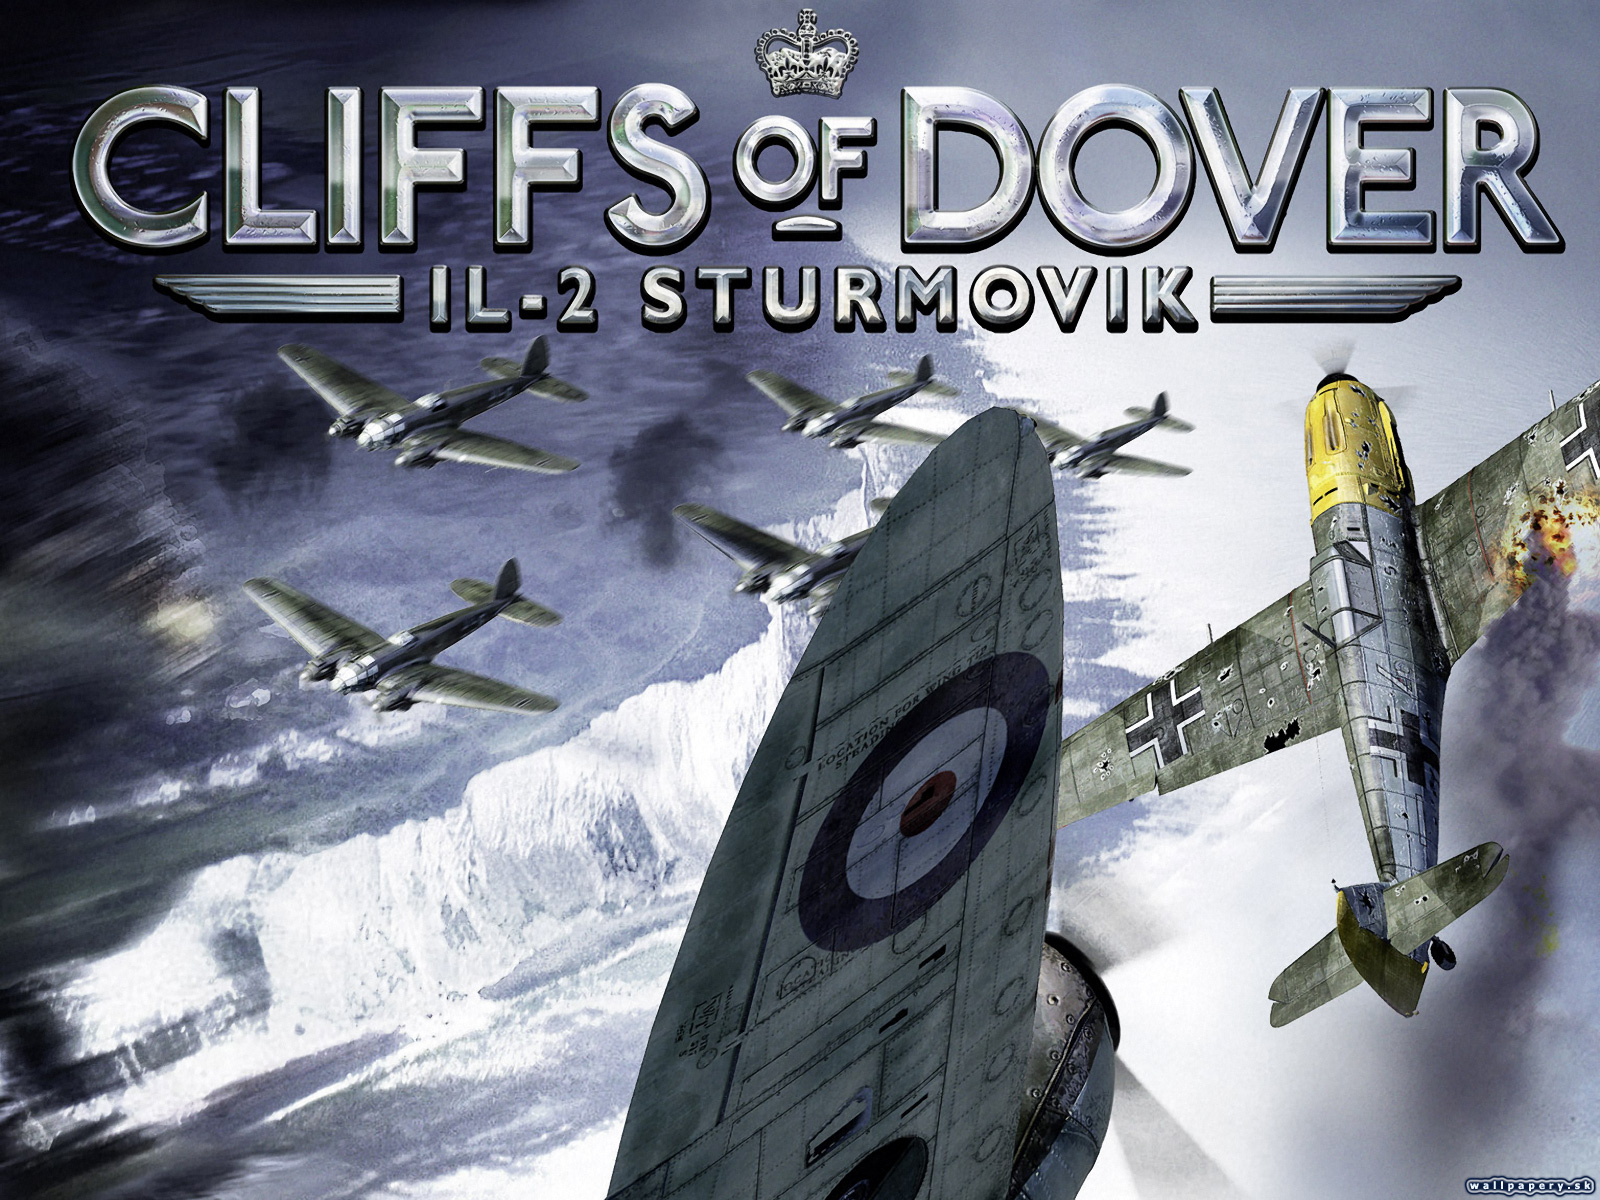 Sturmovik cliffs of dover. Il-2 Sturmovik: Cliffs of Dover. Ил-2 Штурмовик забытые сражения обложка. Ключ активации игры битва за Британию ил 2 Штурмовик.